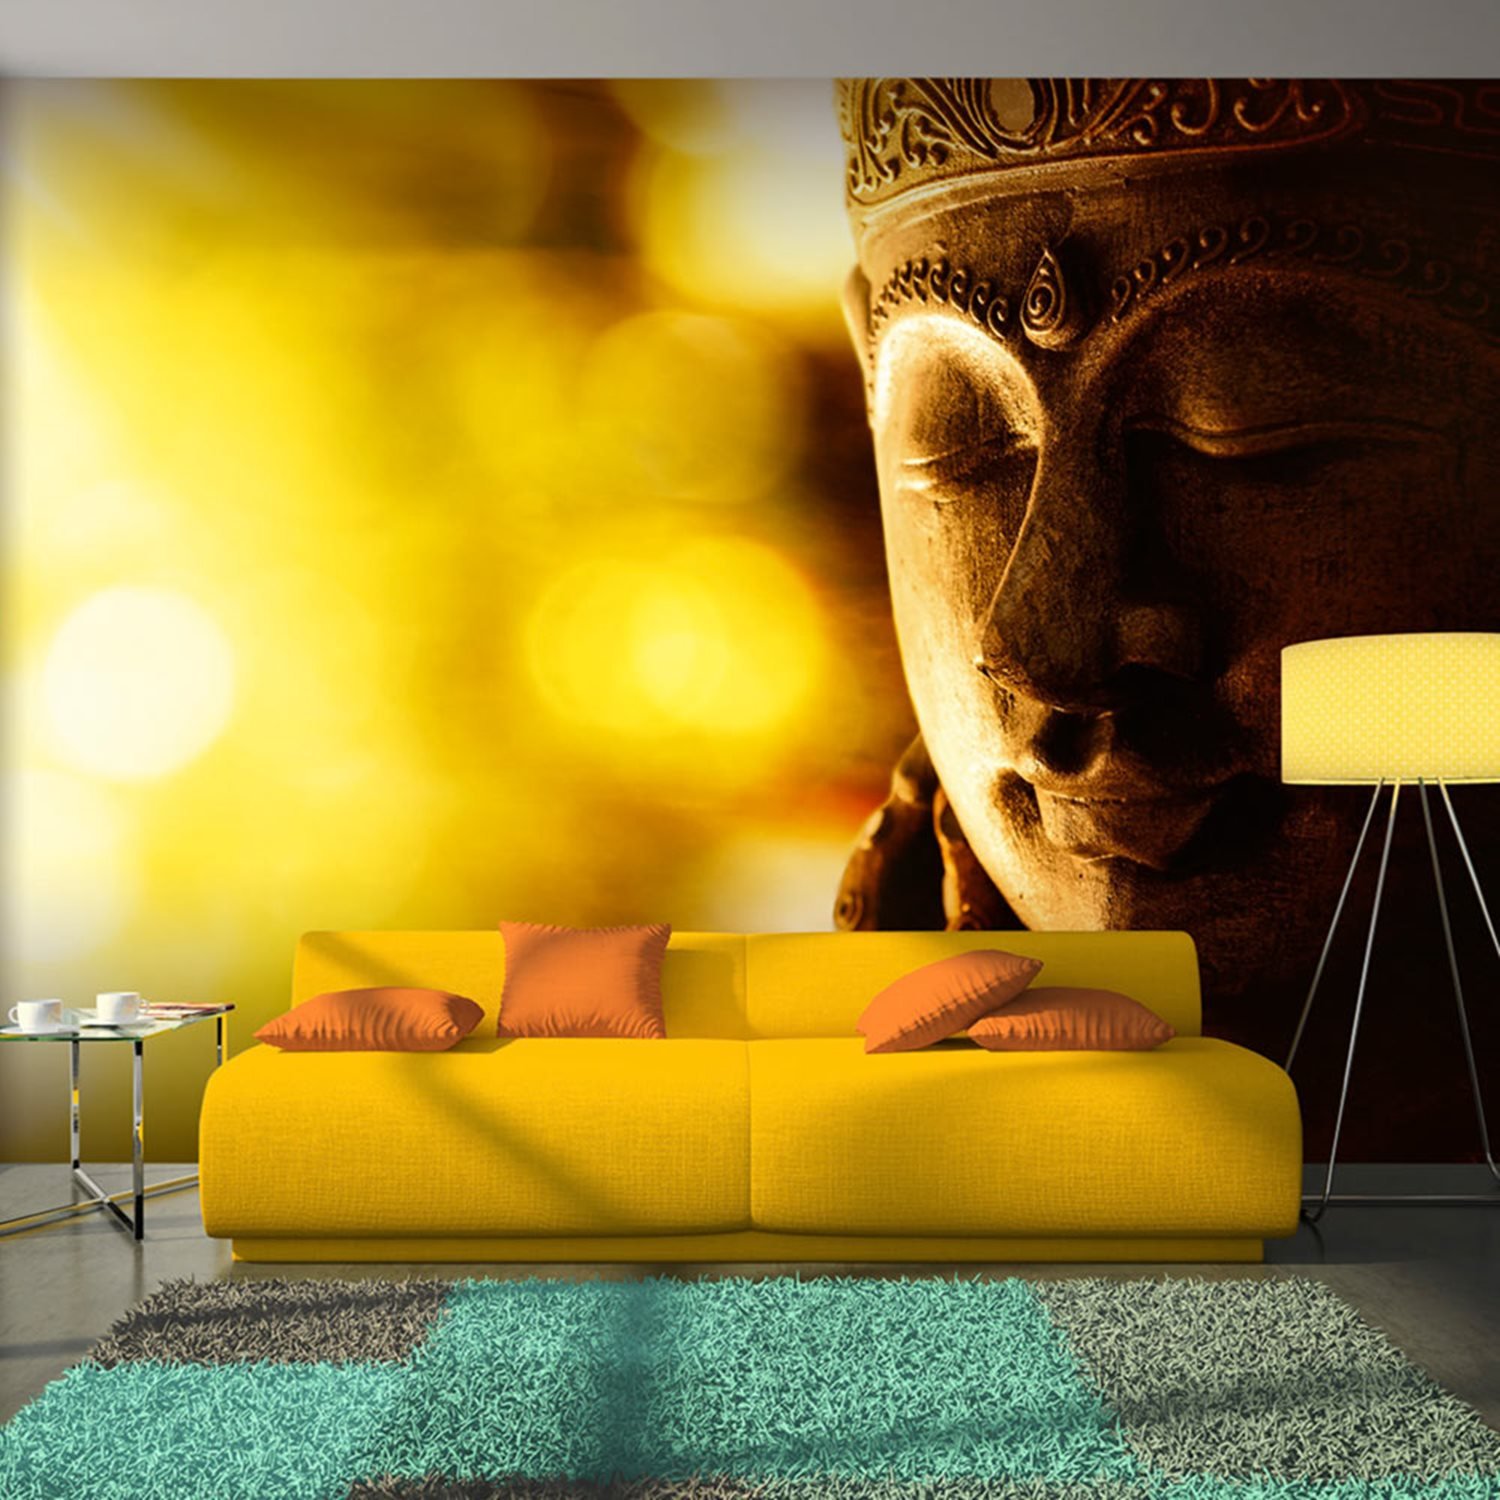 Wallpaper - Buddha - Enlightenment